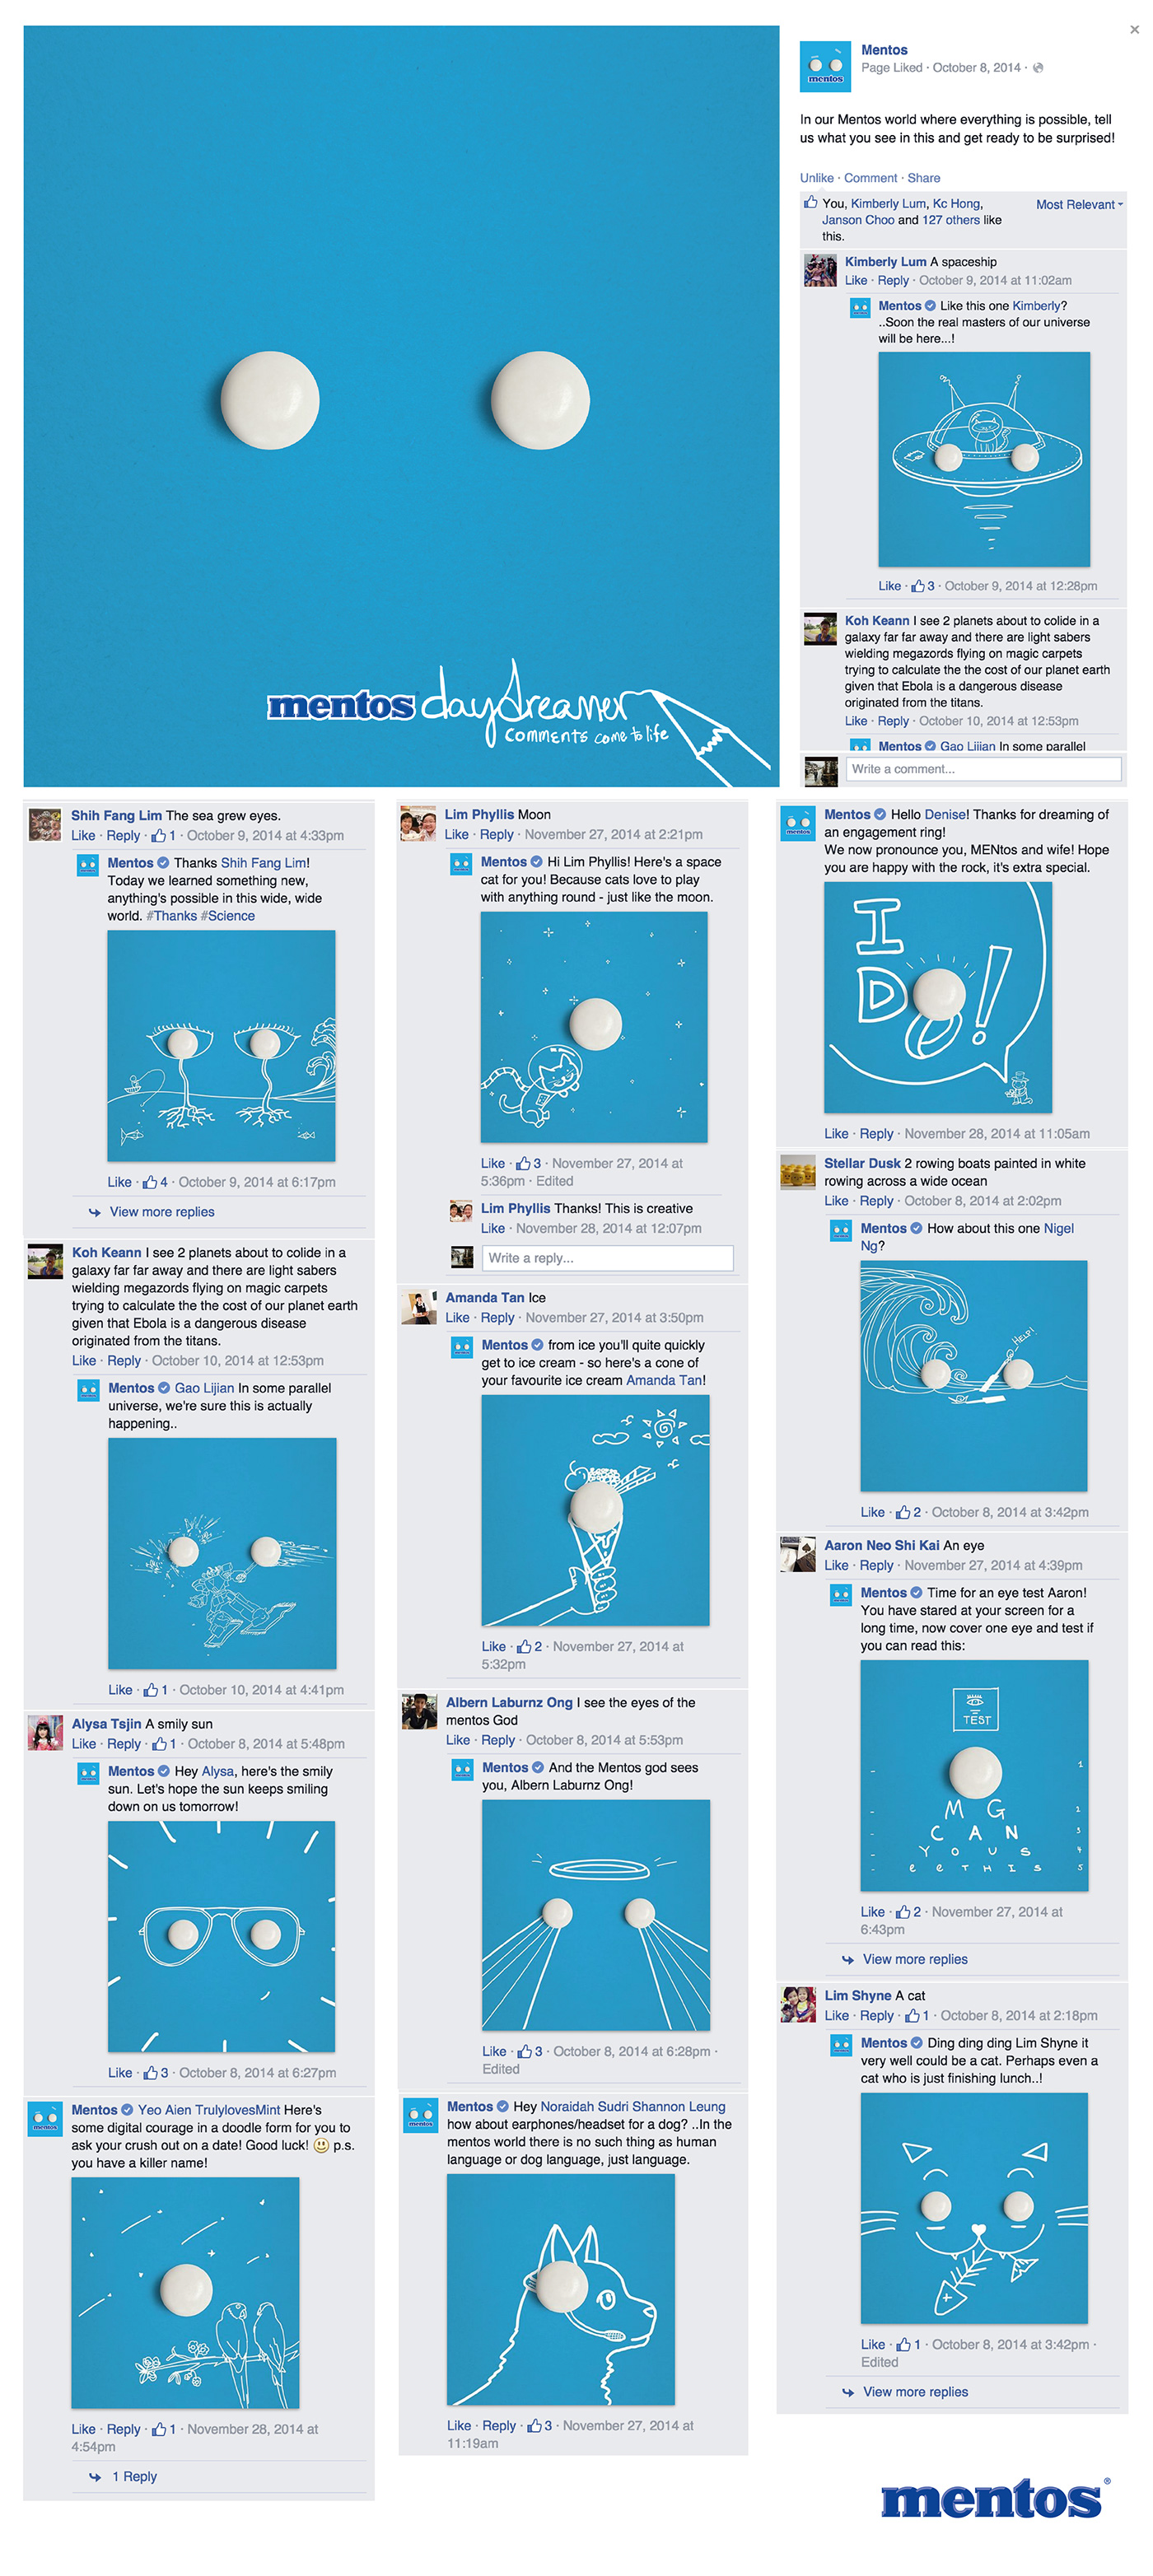 mentos Viral social social media facebook doodle fresh thinking fresh Freshmaker comments Like thumbs up pencil wacom engagement